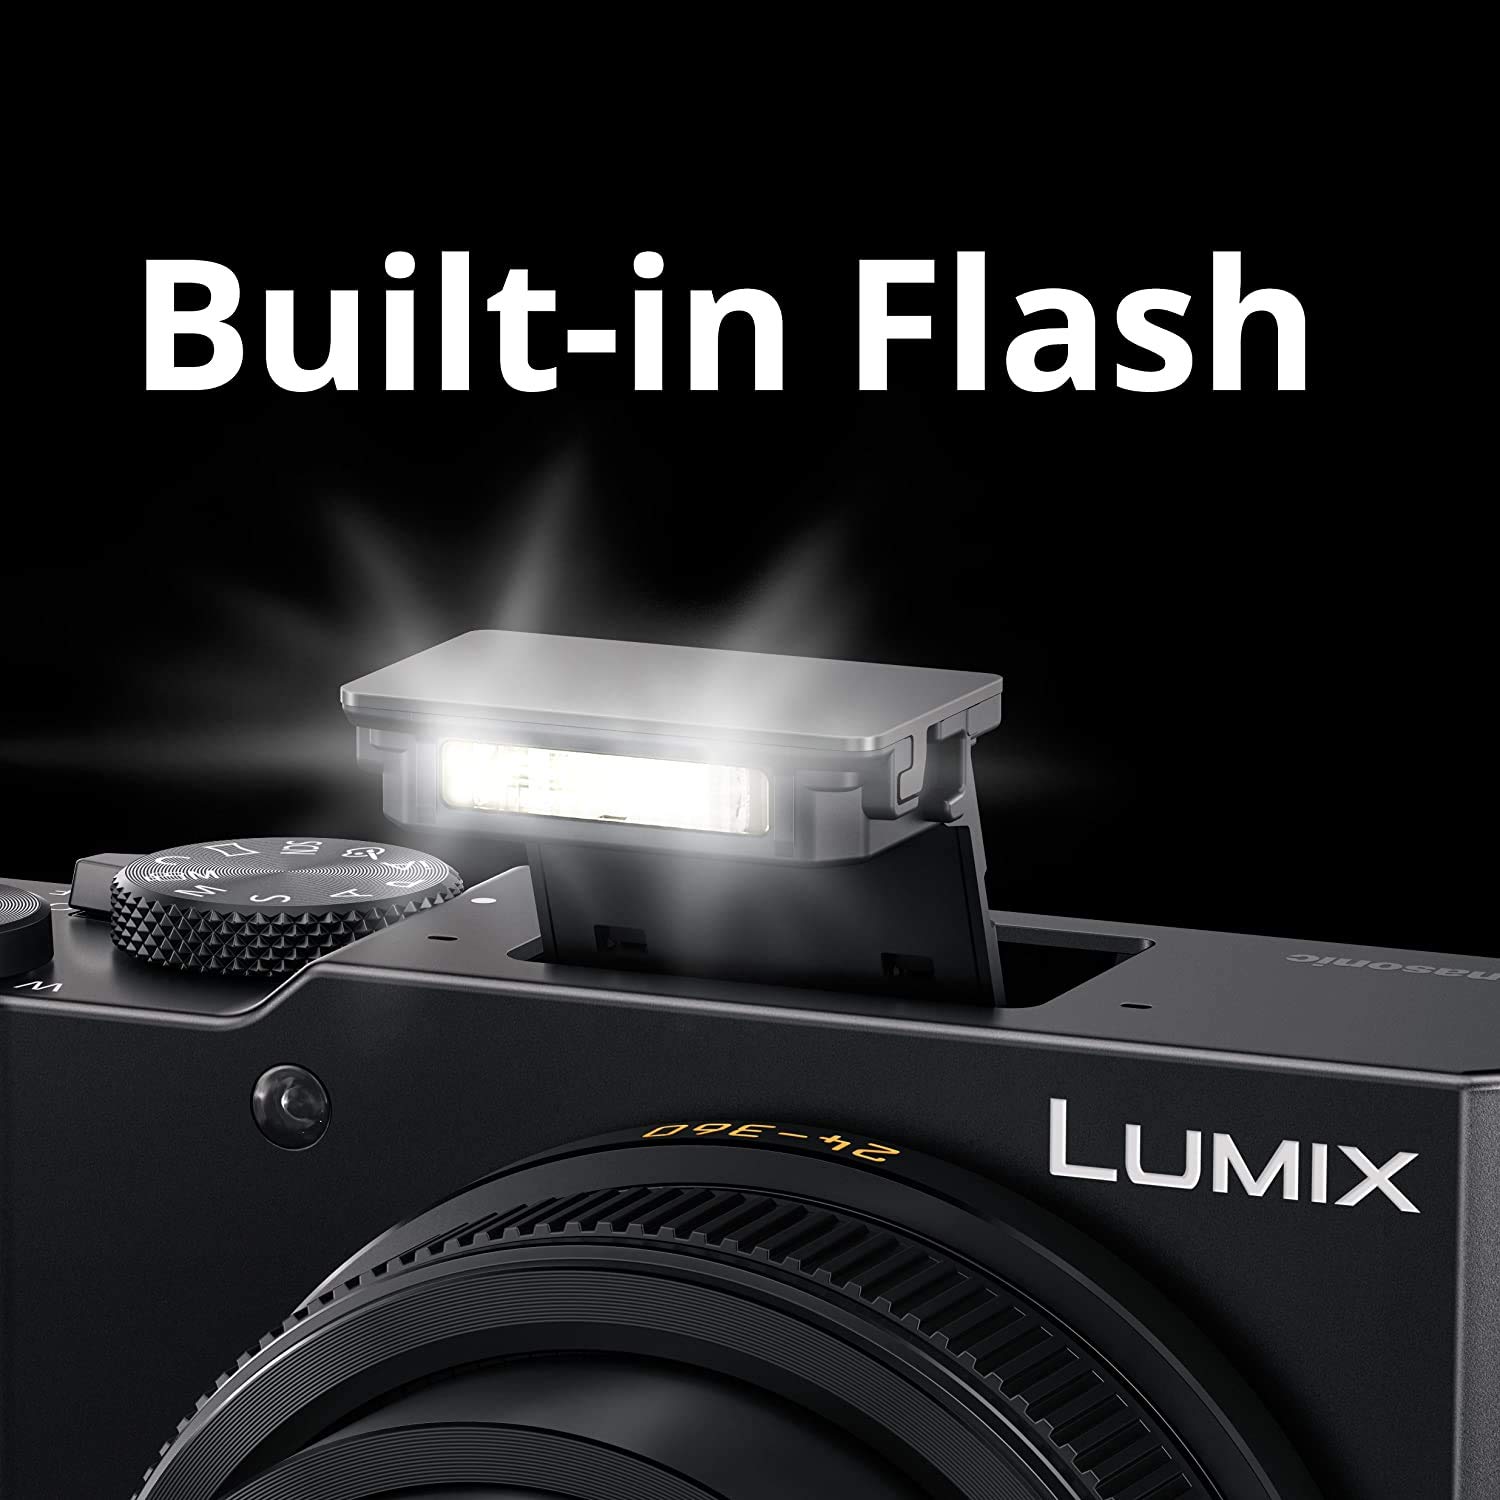 Panasonic LUMIX ZS200D 4K Digital Camera, 20.1MP 1-Inch Sensor, 15X Leica DC Vario-Elmar Lens, F3.3-6.4 Aperture, WiFi, Hybrid O.I.S. Stabilization, 3-Inch LCD, DC-ZS200DK (Black)